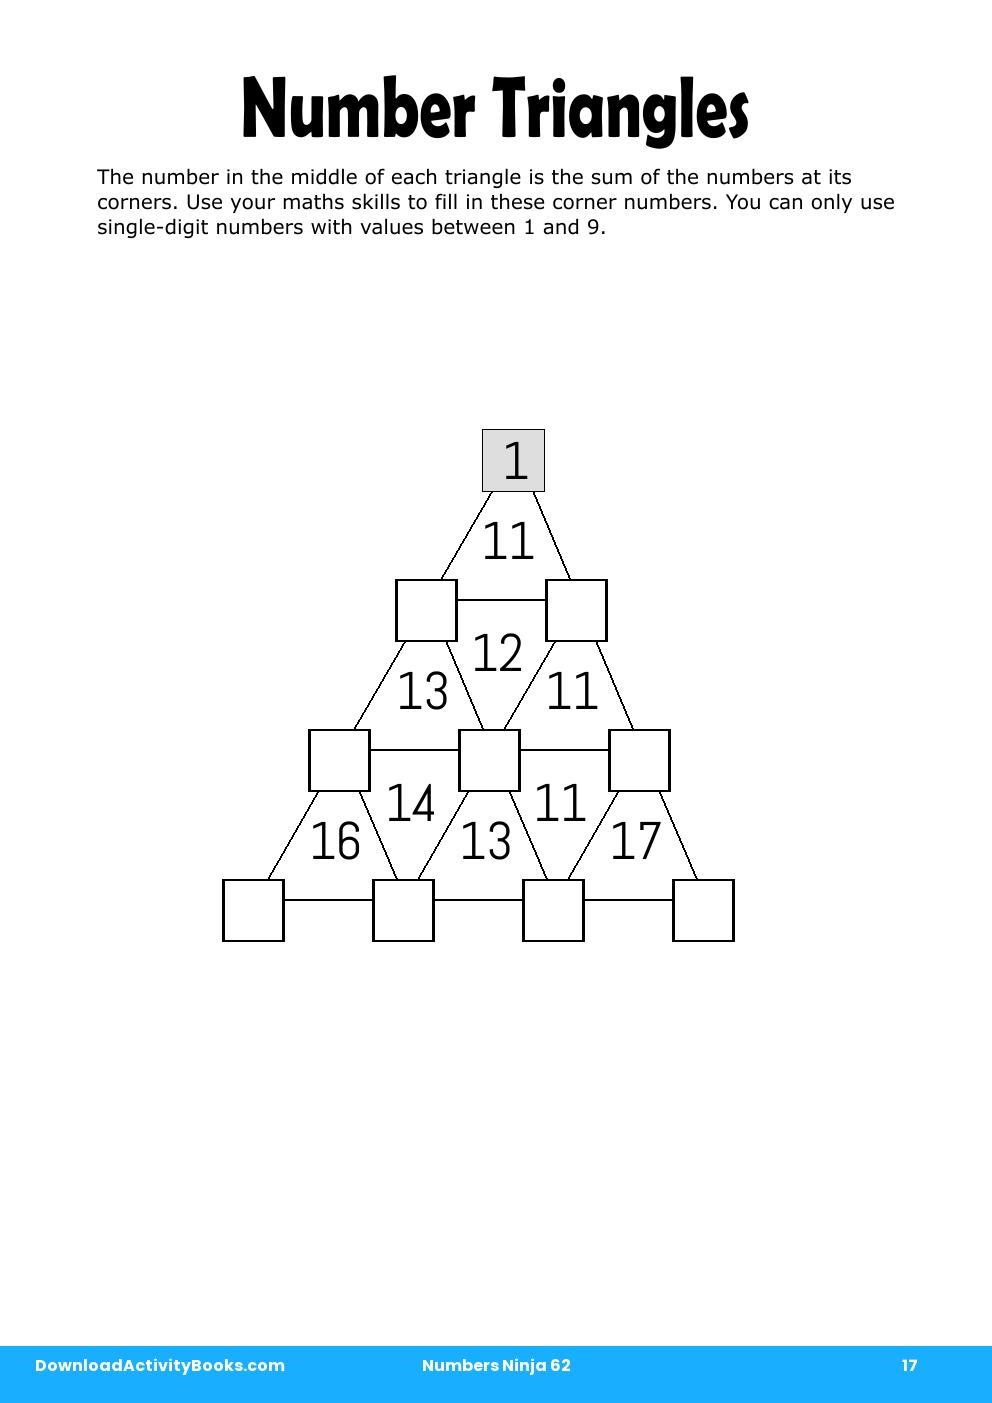 Number Triangles in Numbers Ninja 62